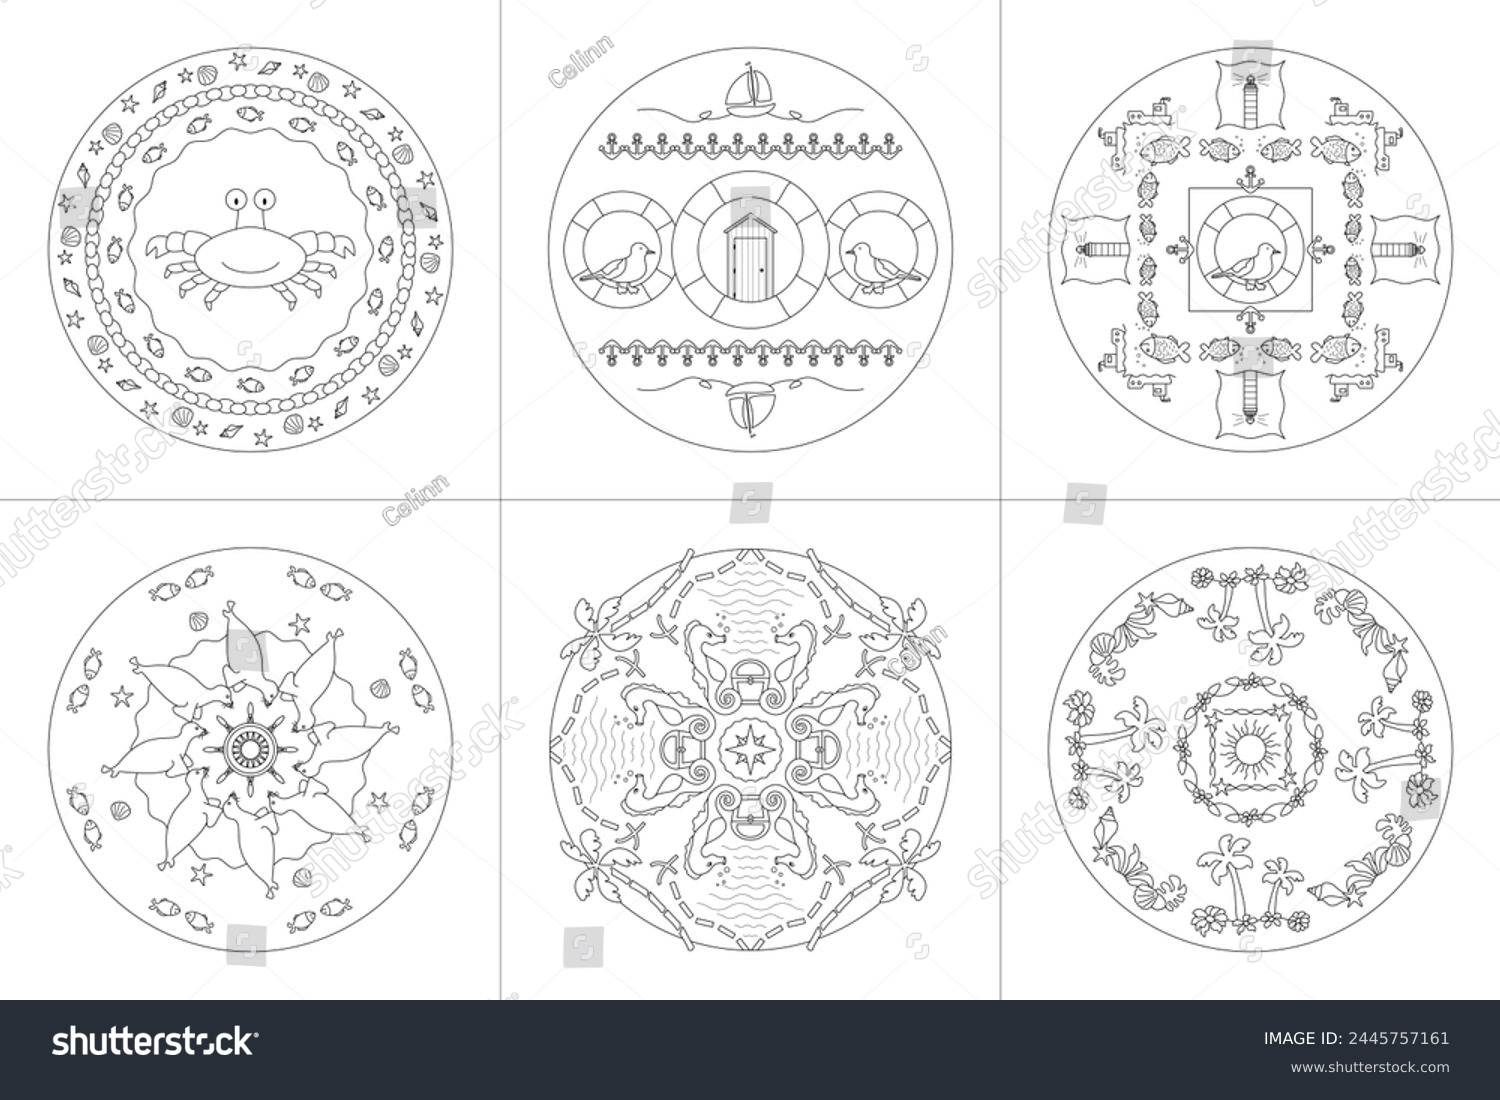 SVG of Mandalas. Sea Theme. Coloring pages. Vector illustration. Set No. 4.  svg